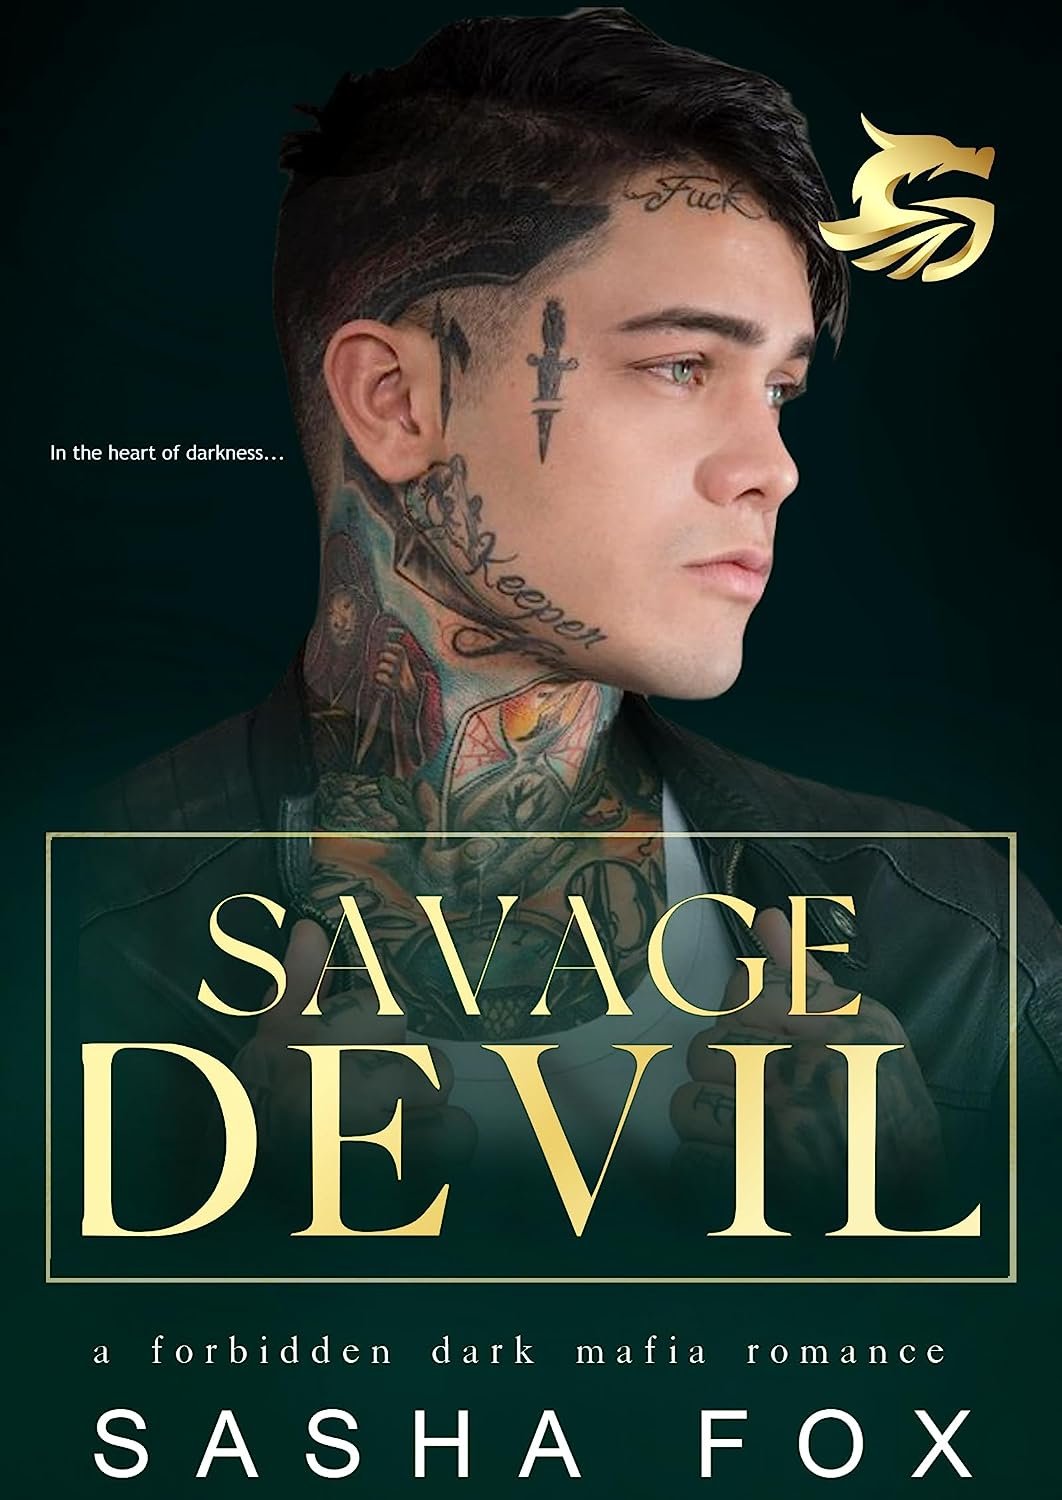 Sasha Fox - Savage Devil : Une Romance Mafieuse Sombre